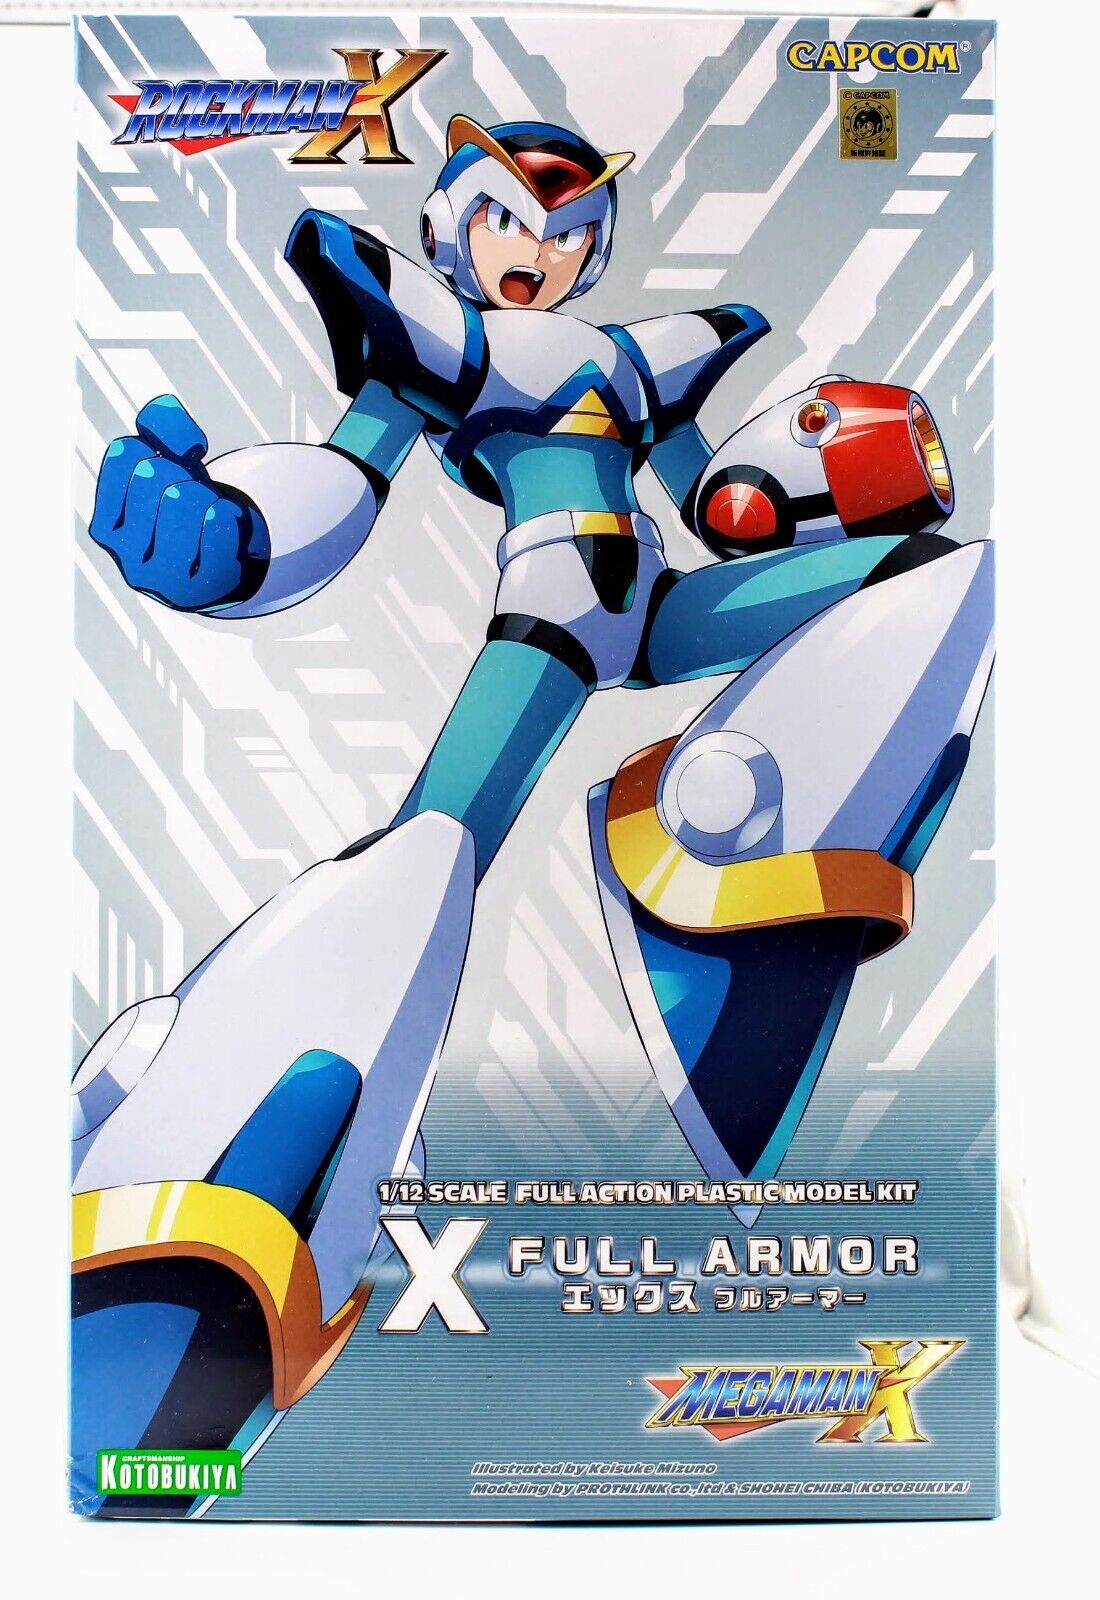 Kotobukiya Mega Man X 1/12 Scale Full Armor Capcom Model Kit Officially Licensed